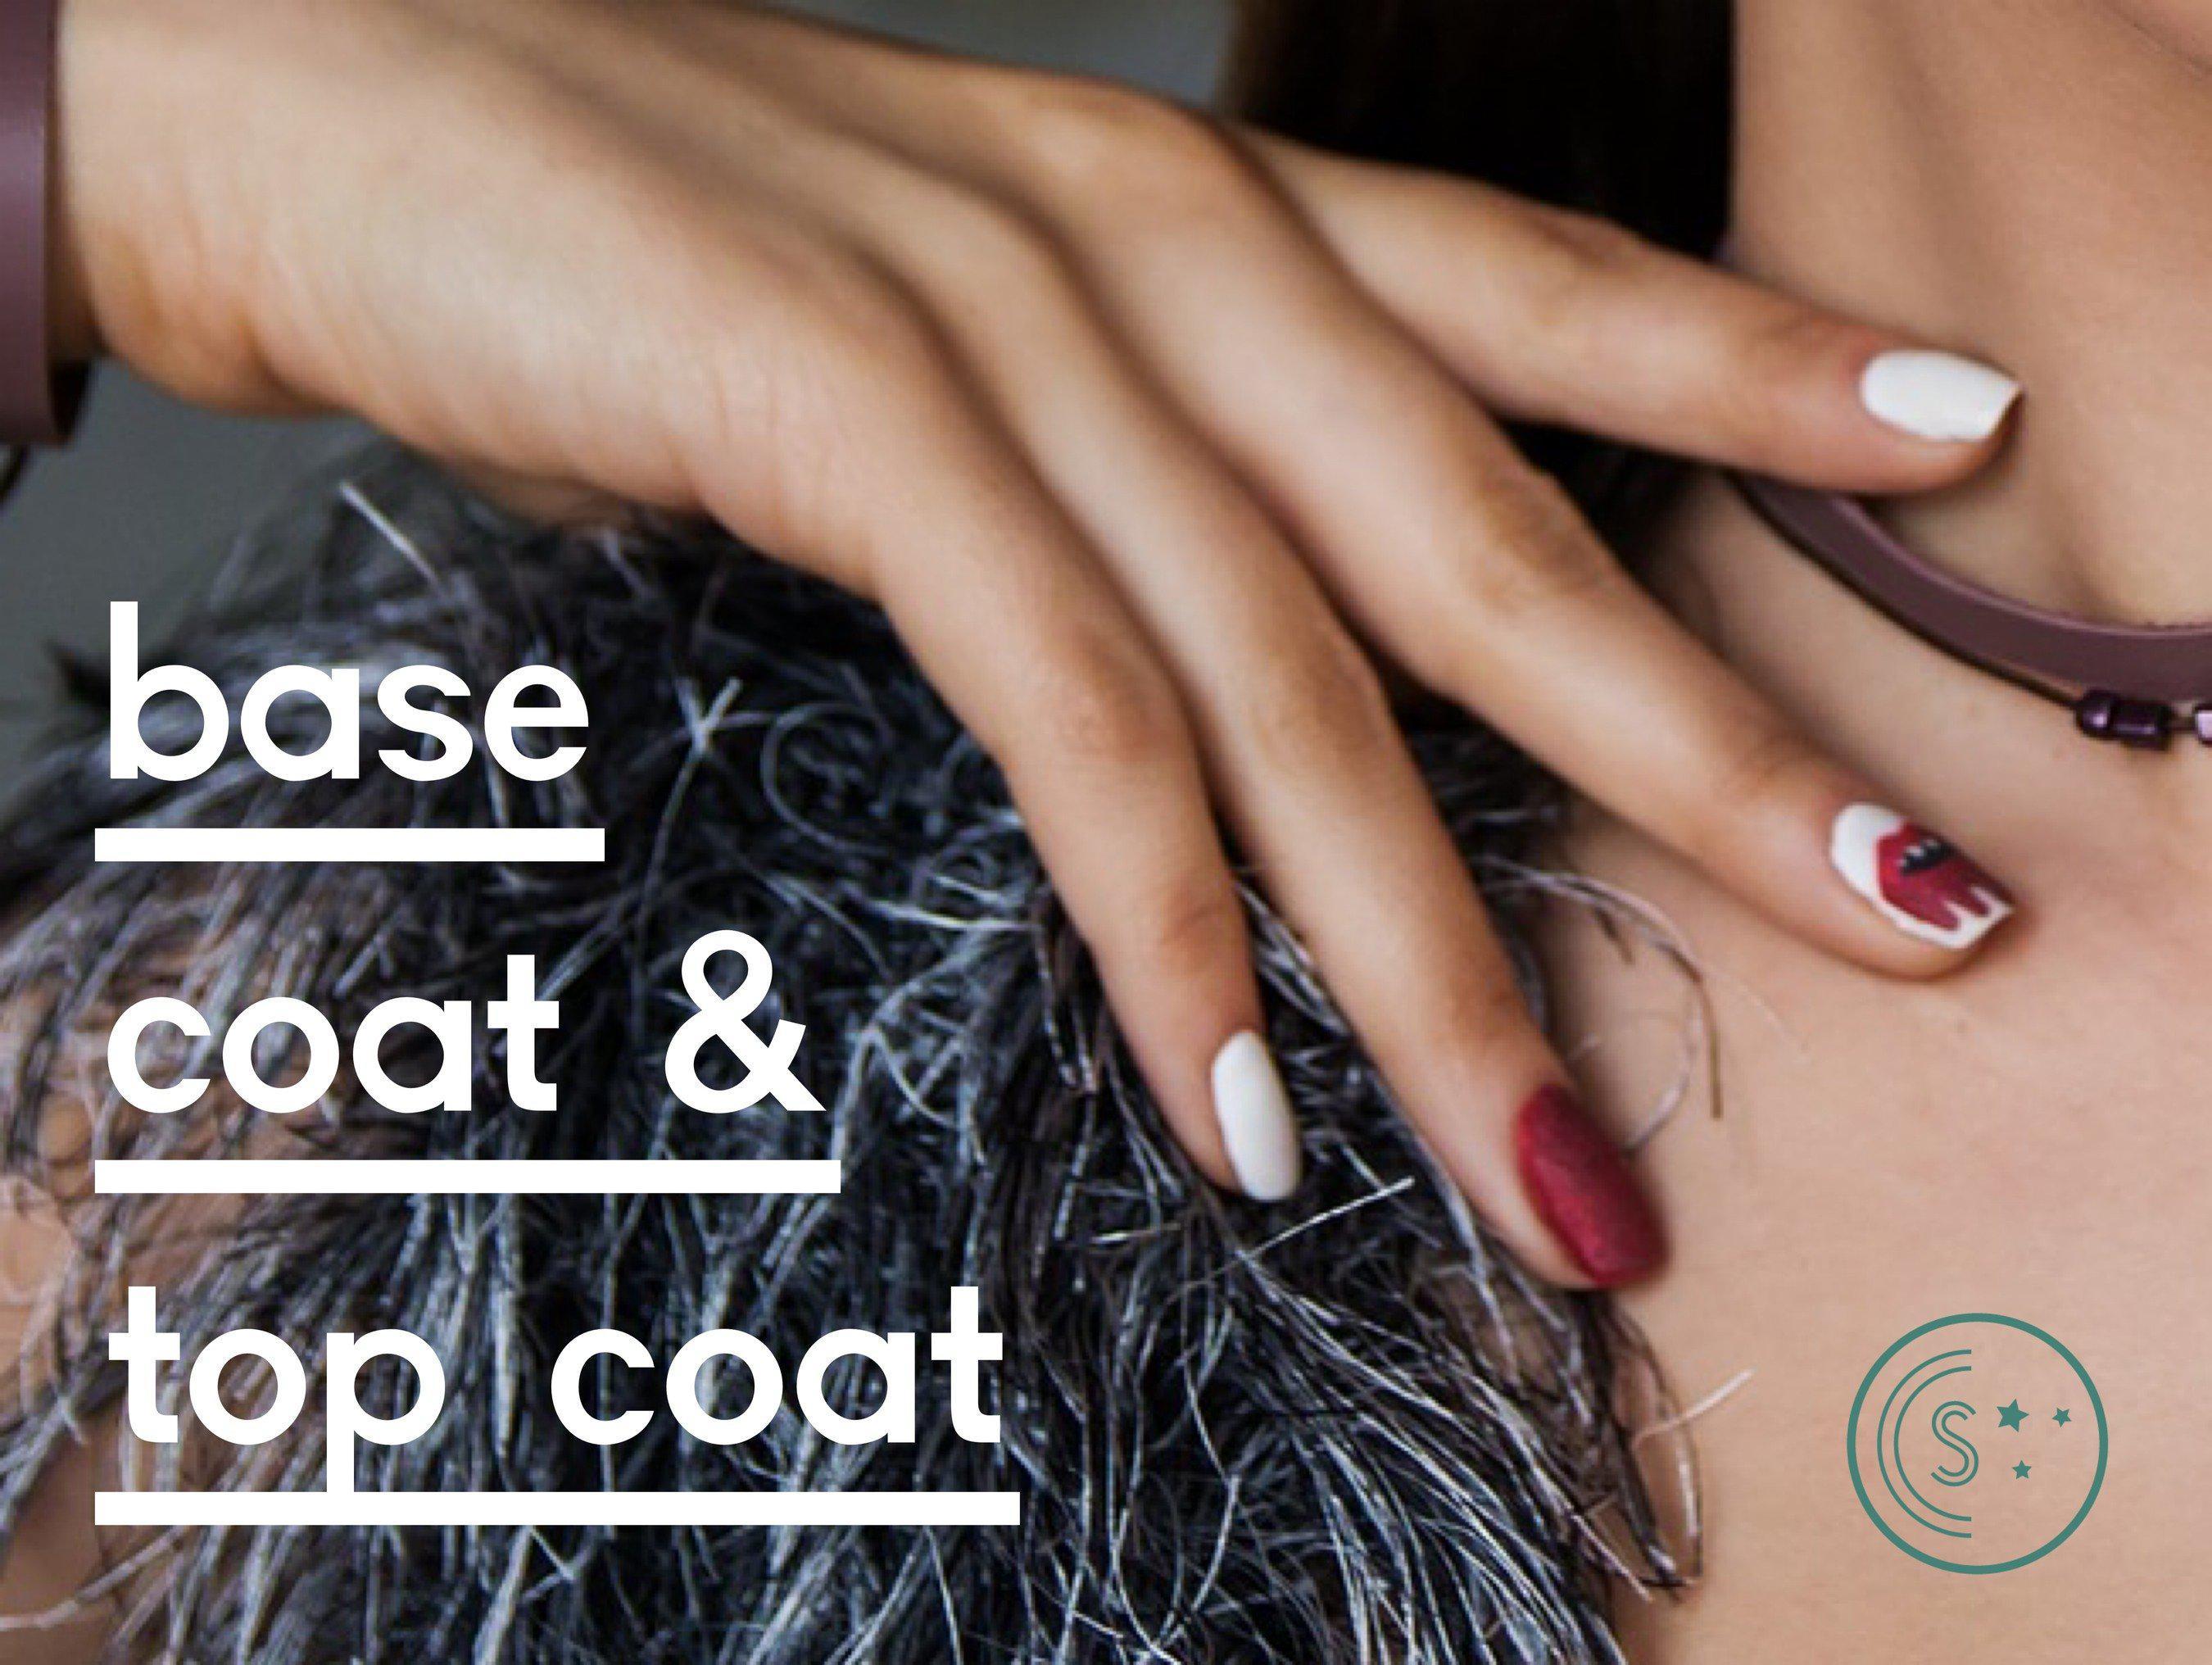 Do you need a base coat before you apply nail polish?